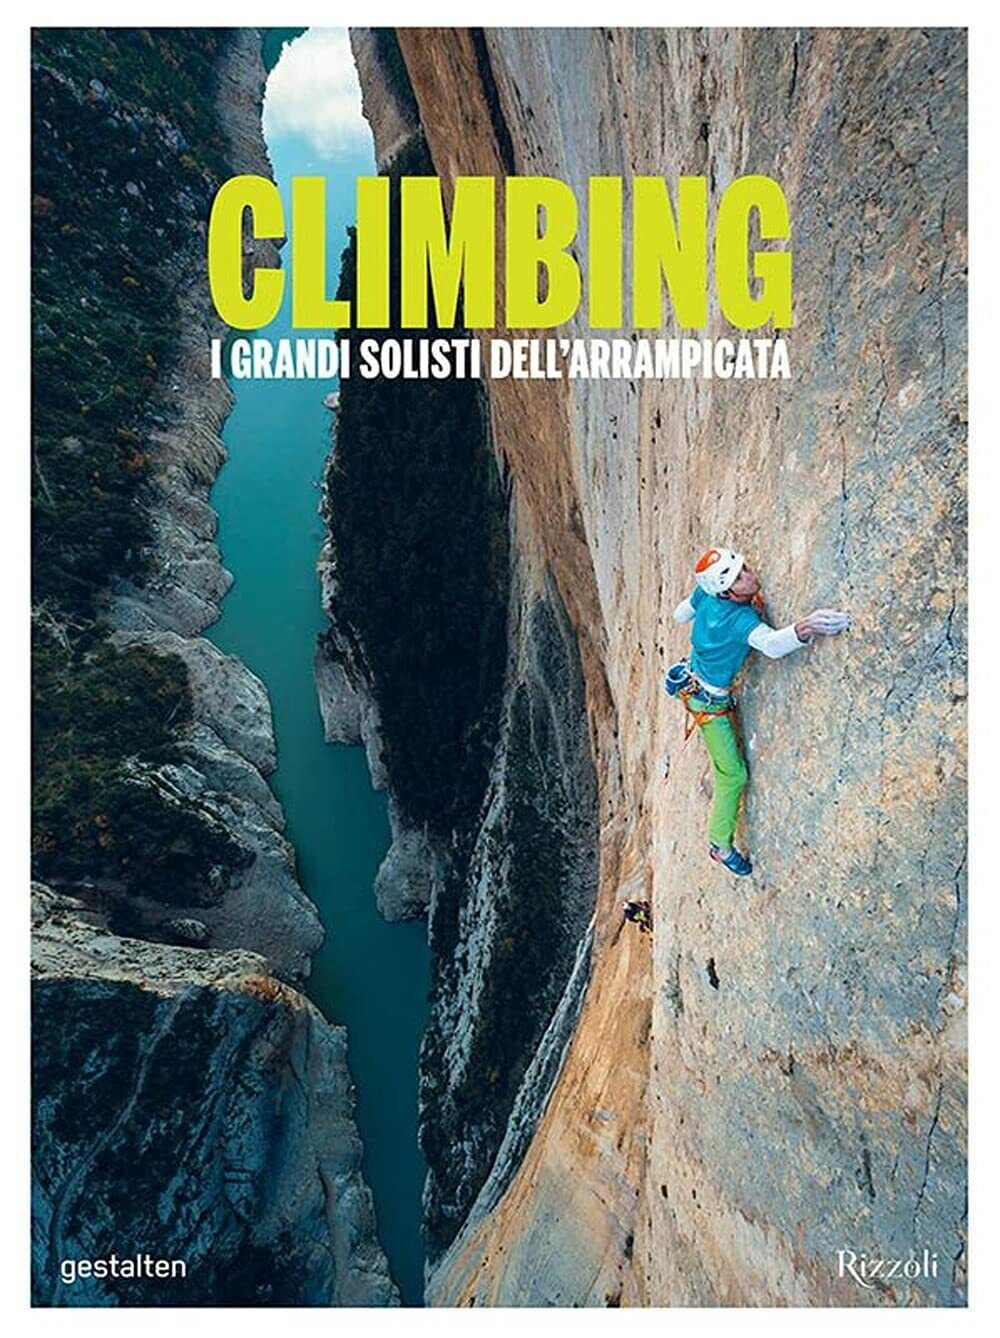 Climbing. I grandi solisti dell'arrampicata - Ellison, Klanten, Servert - 2021 libro usato